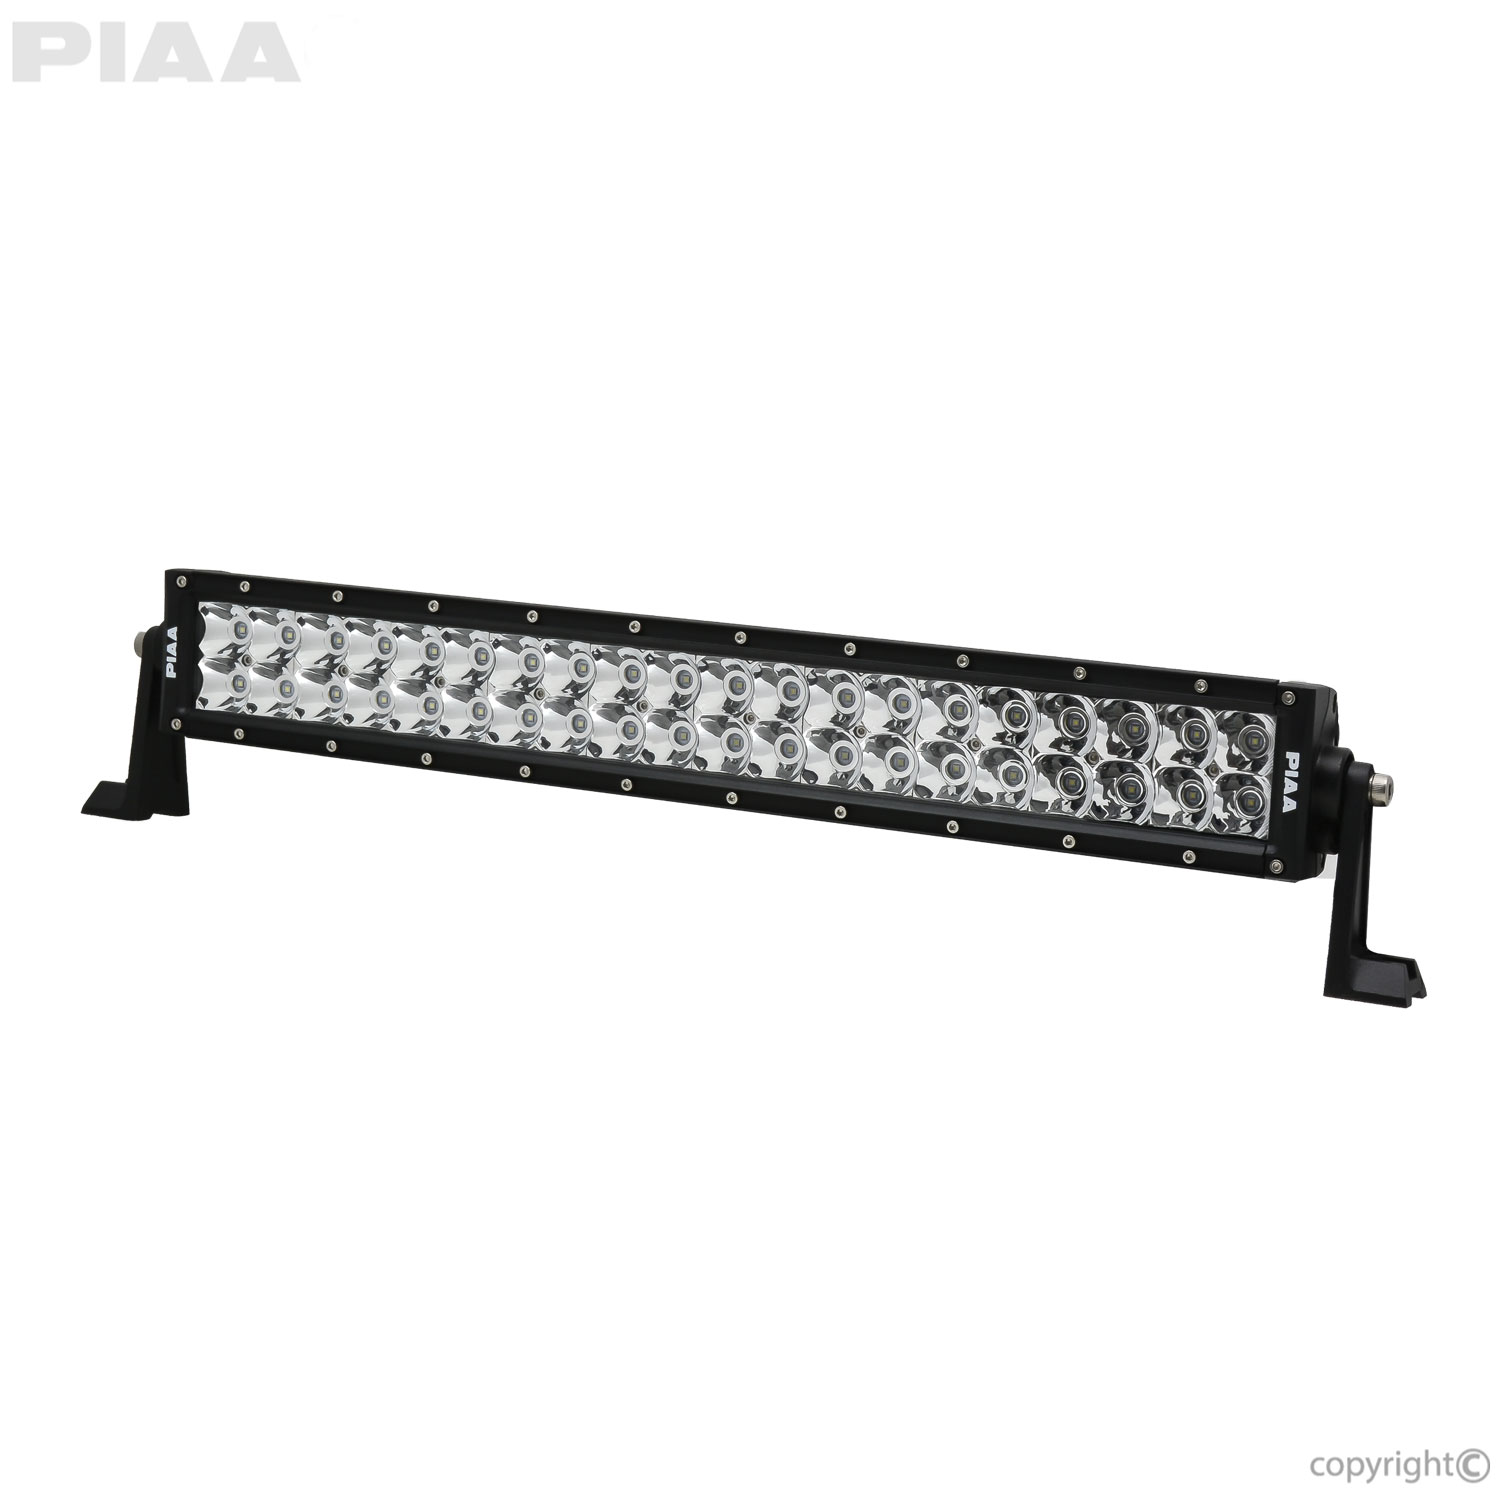 PIAA | Quad 20" Row LED Light Bar #Q20